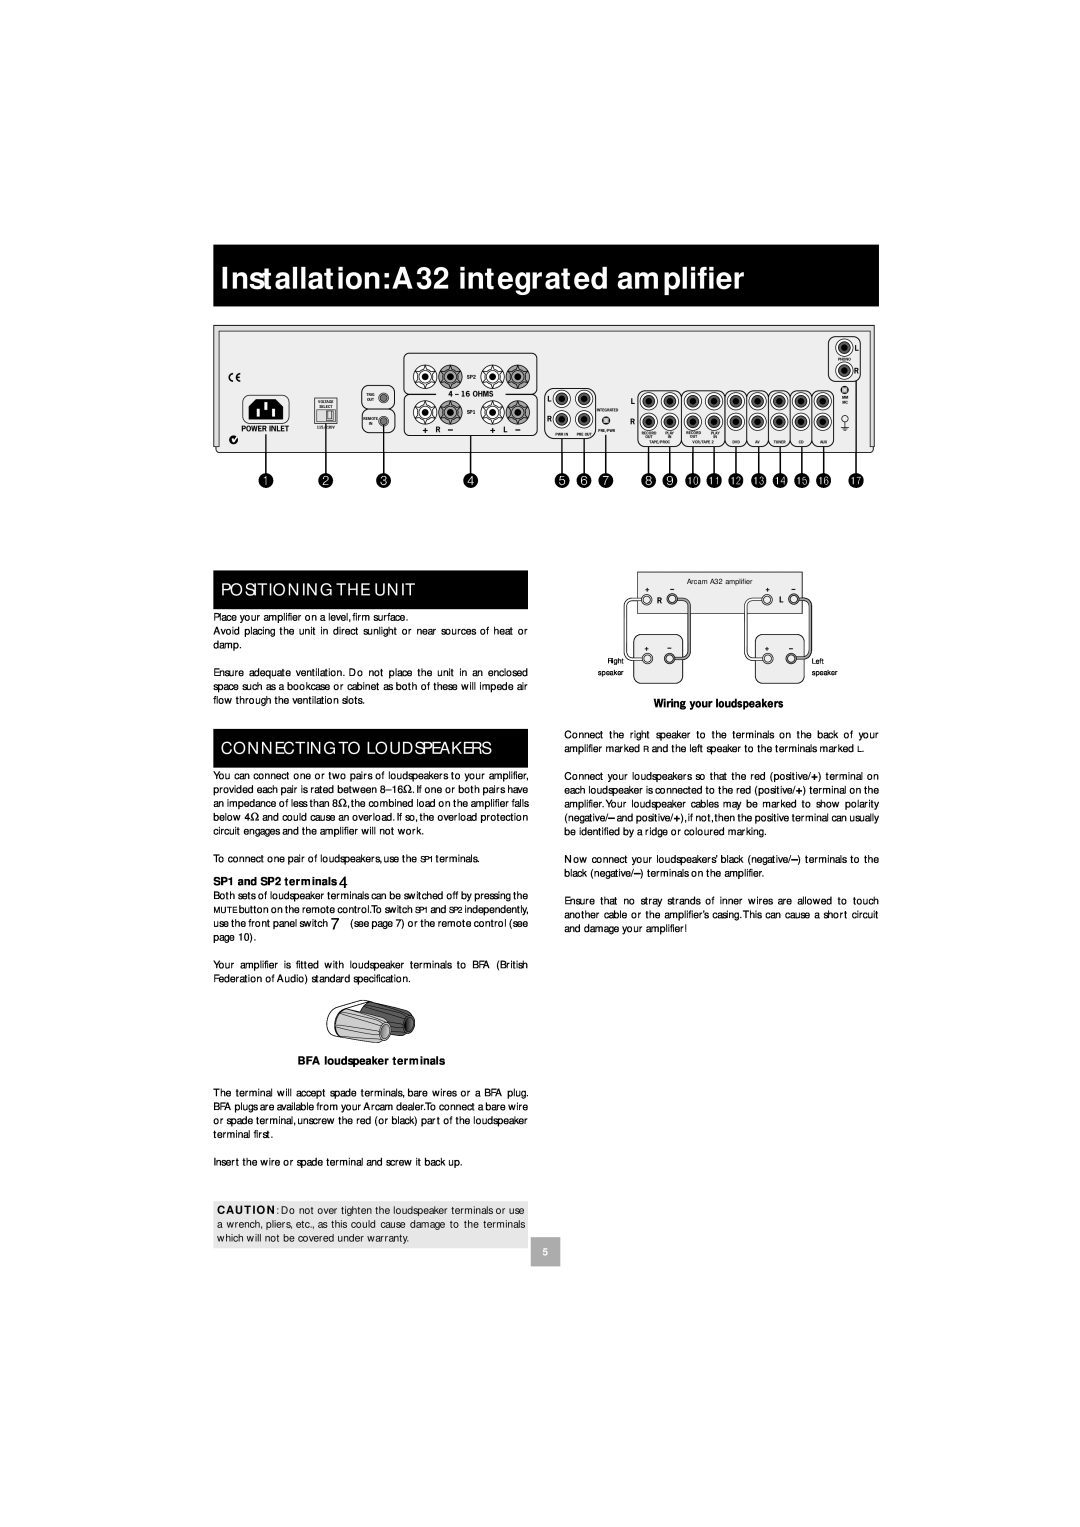 Arcam manual Installation A32 integrated ampliﬁer, 5 6 7 8 9 bk bl bm bn bo bp bq br, Positioning The Unit 